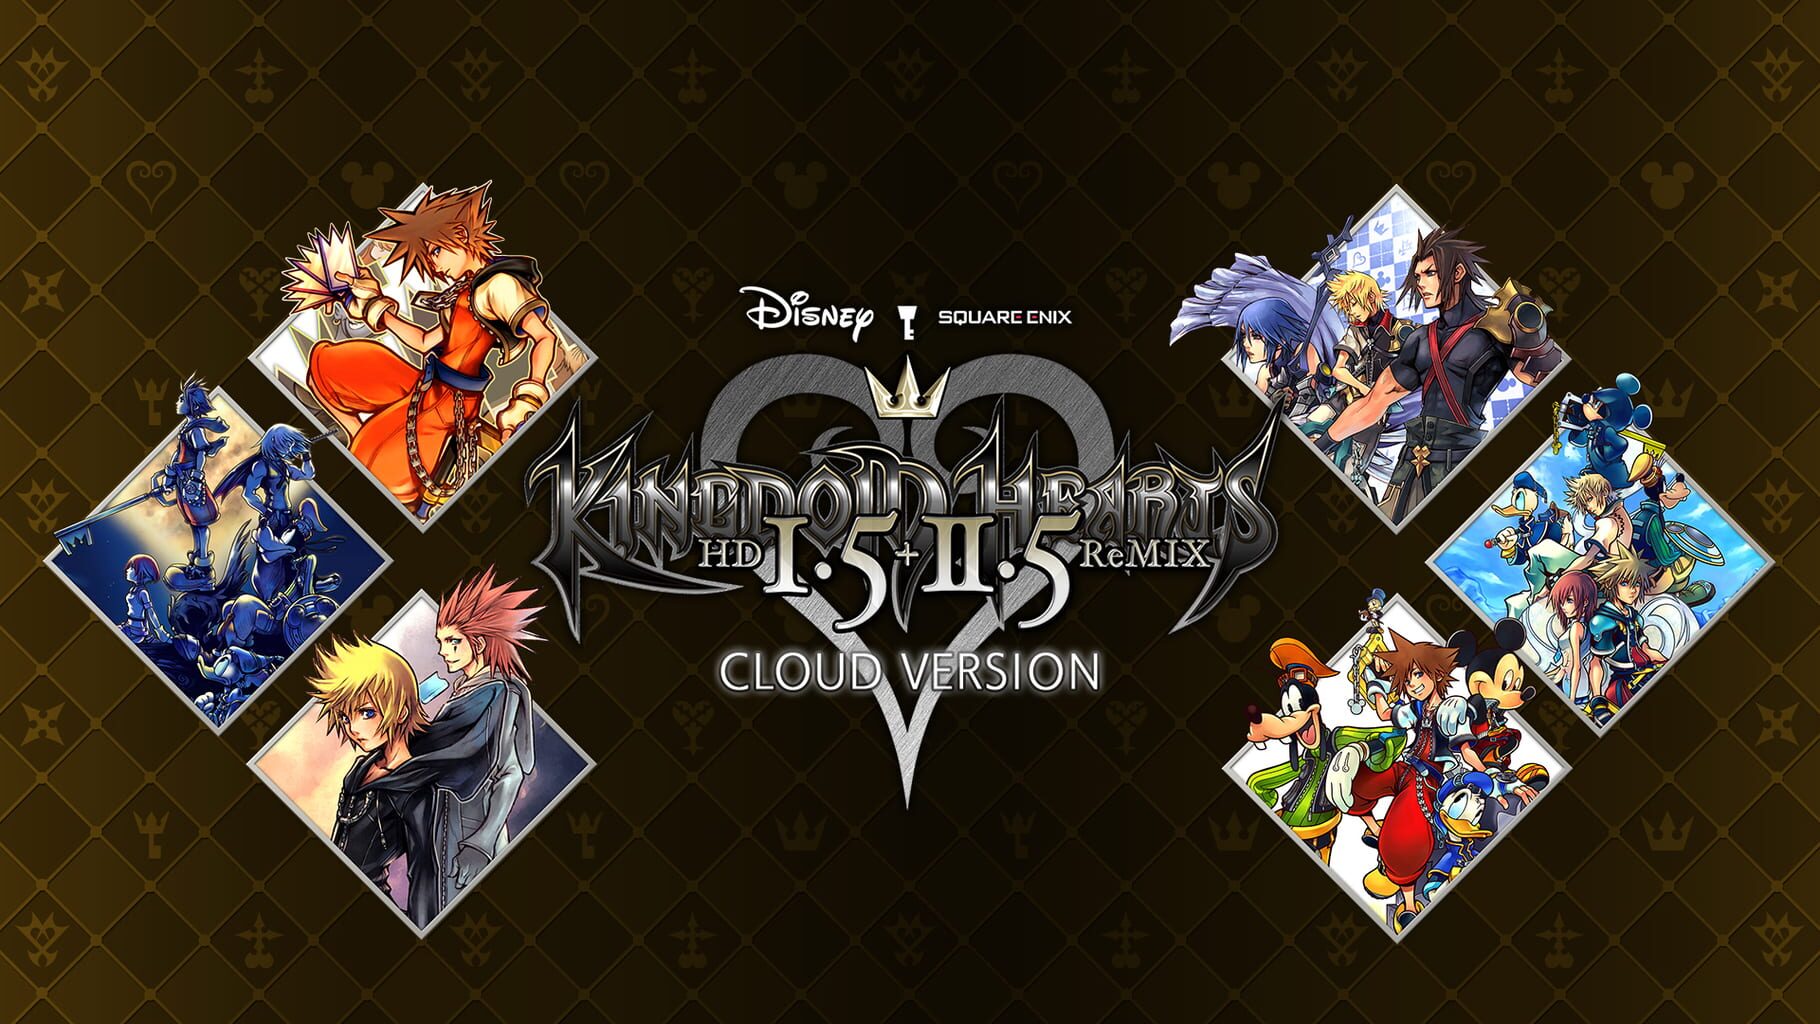 Kingdom Hearts HD 1.5 + 2.5 Remix: Cloud Version artwork